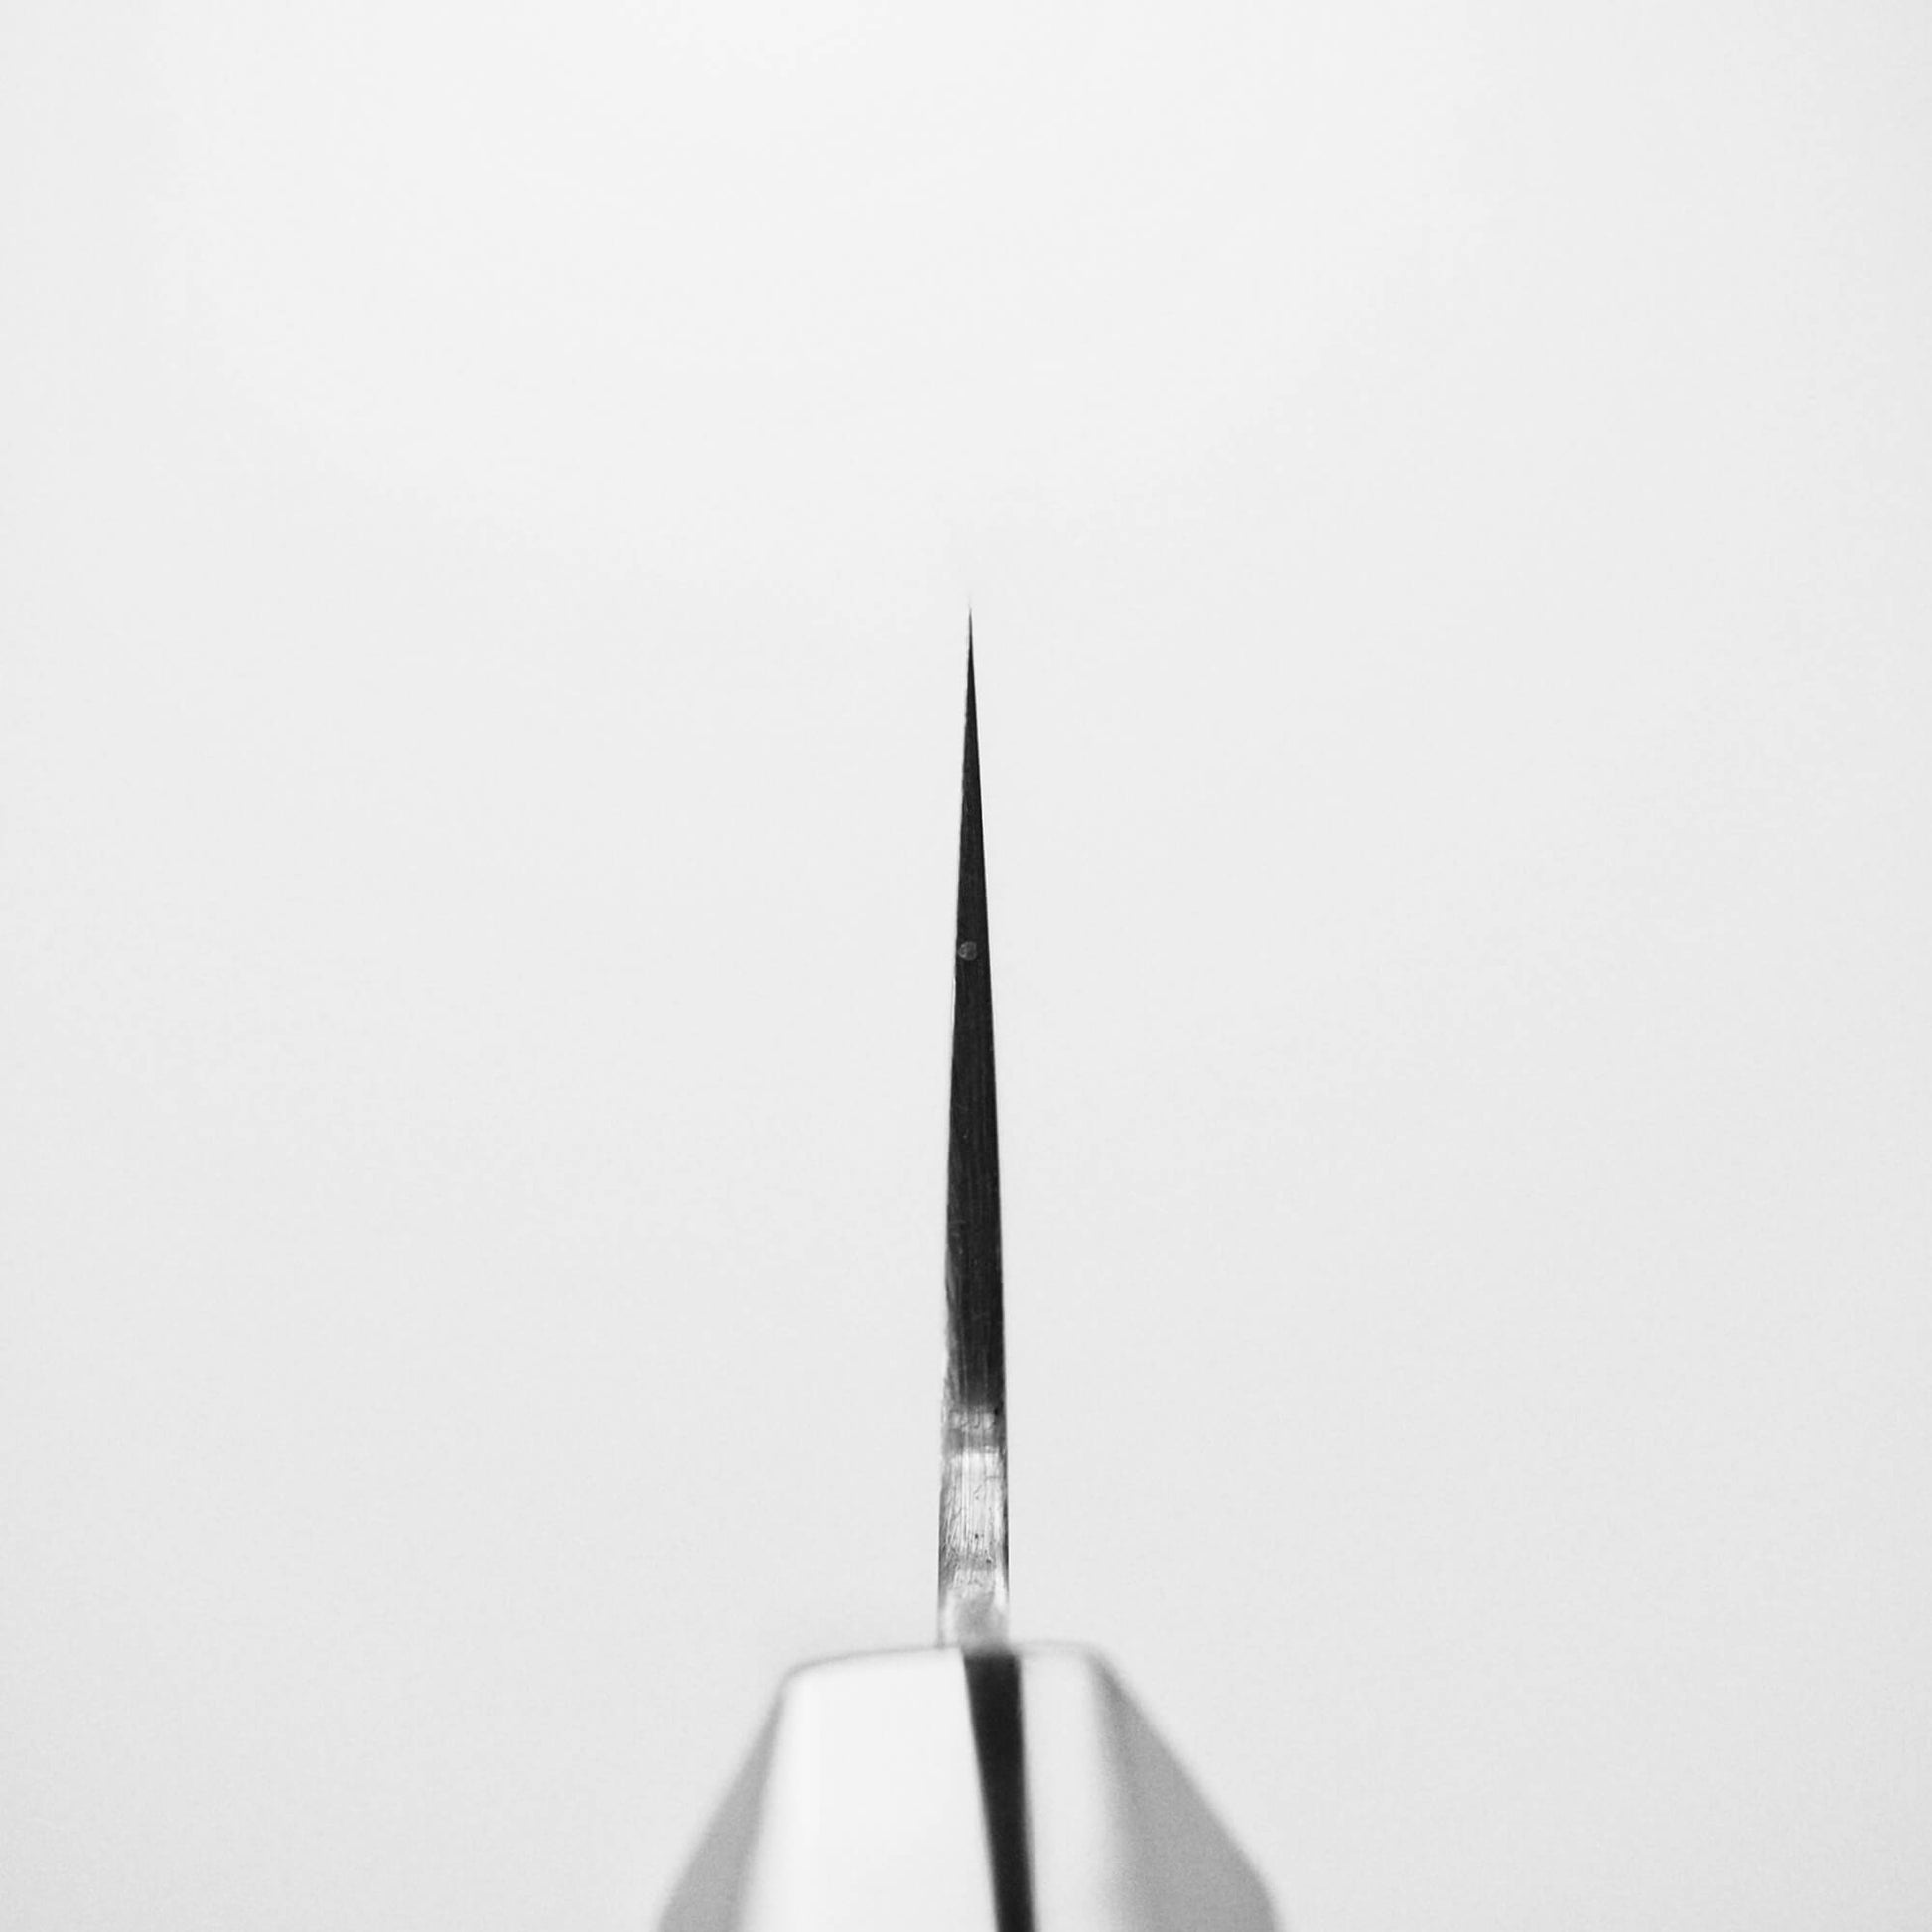 Choil shot of 240mm Sukenari ZDP189 gyuto knife